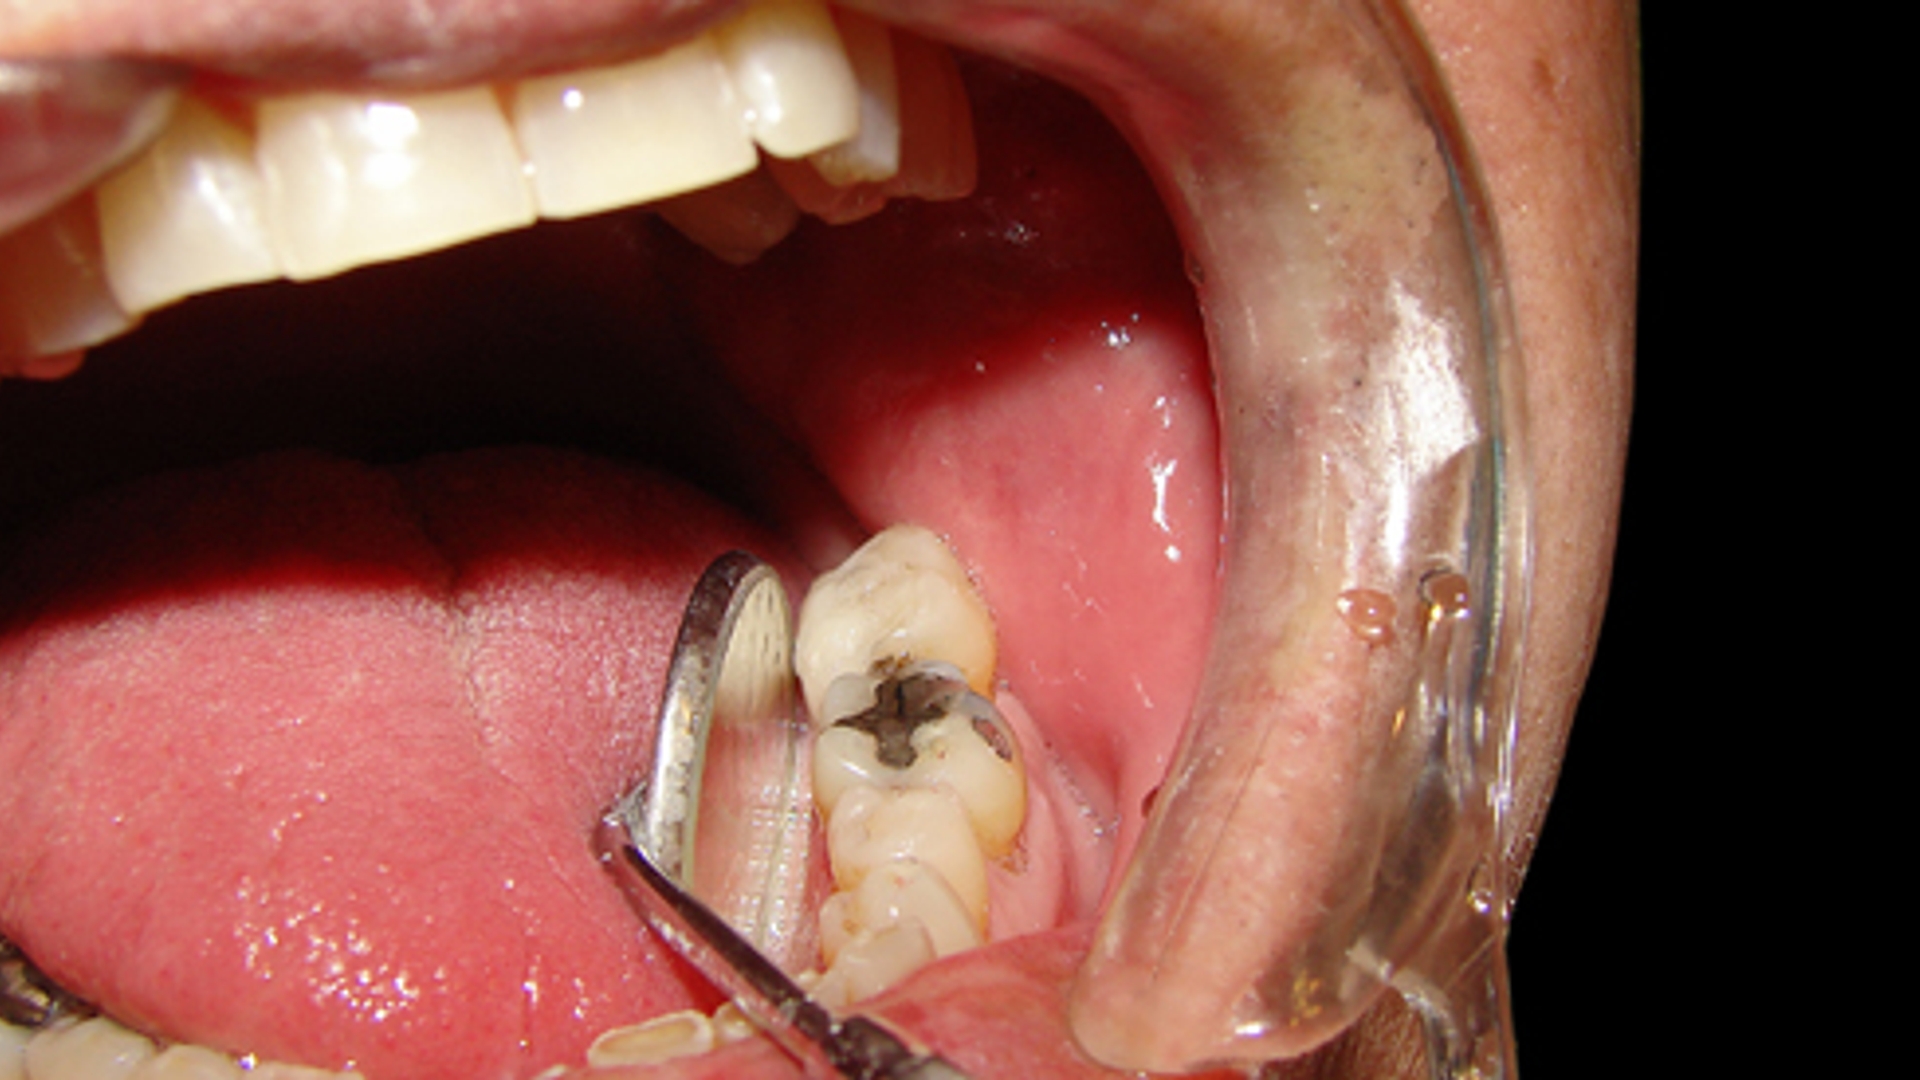 tandartsbehandeling_04.jpg